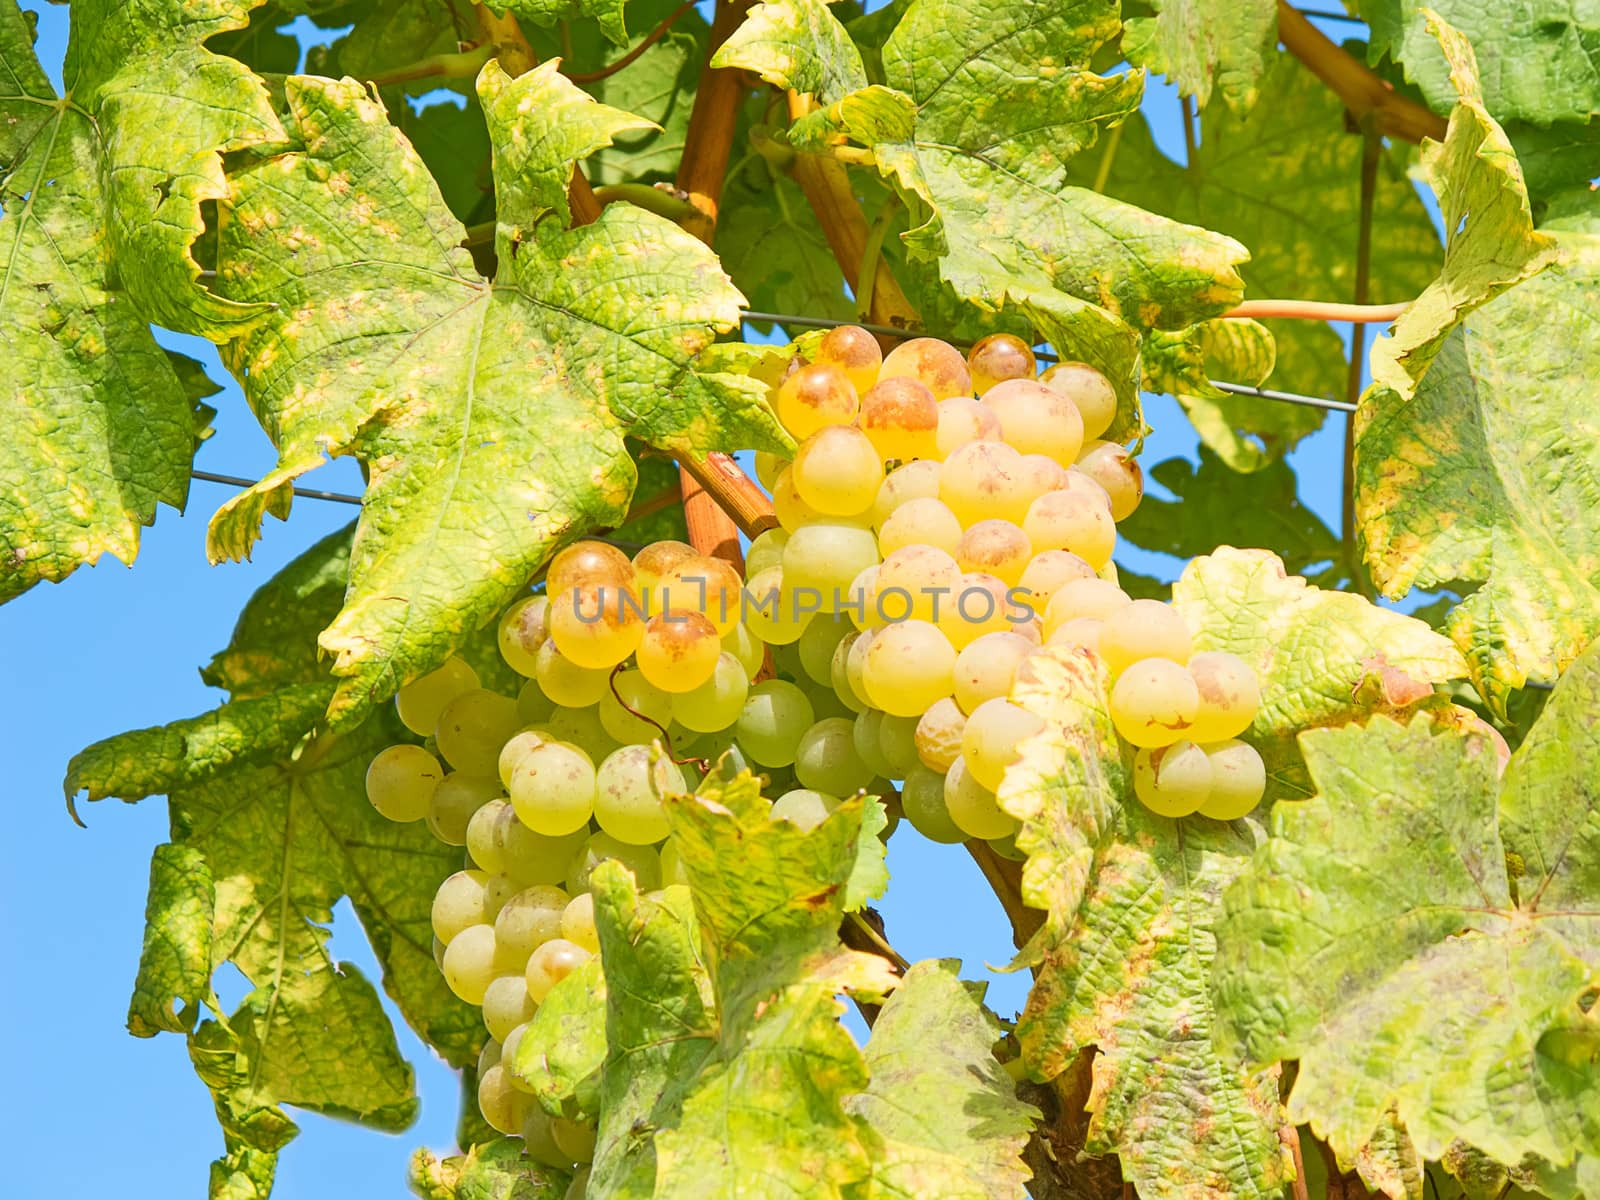 Vineyards of the Lavaux region over lake Leman (lake of Geneva)